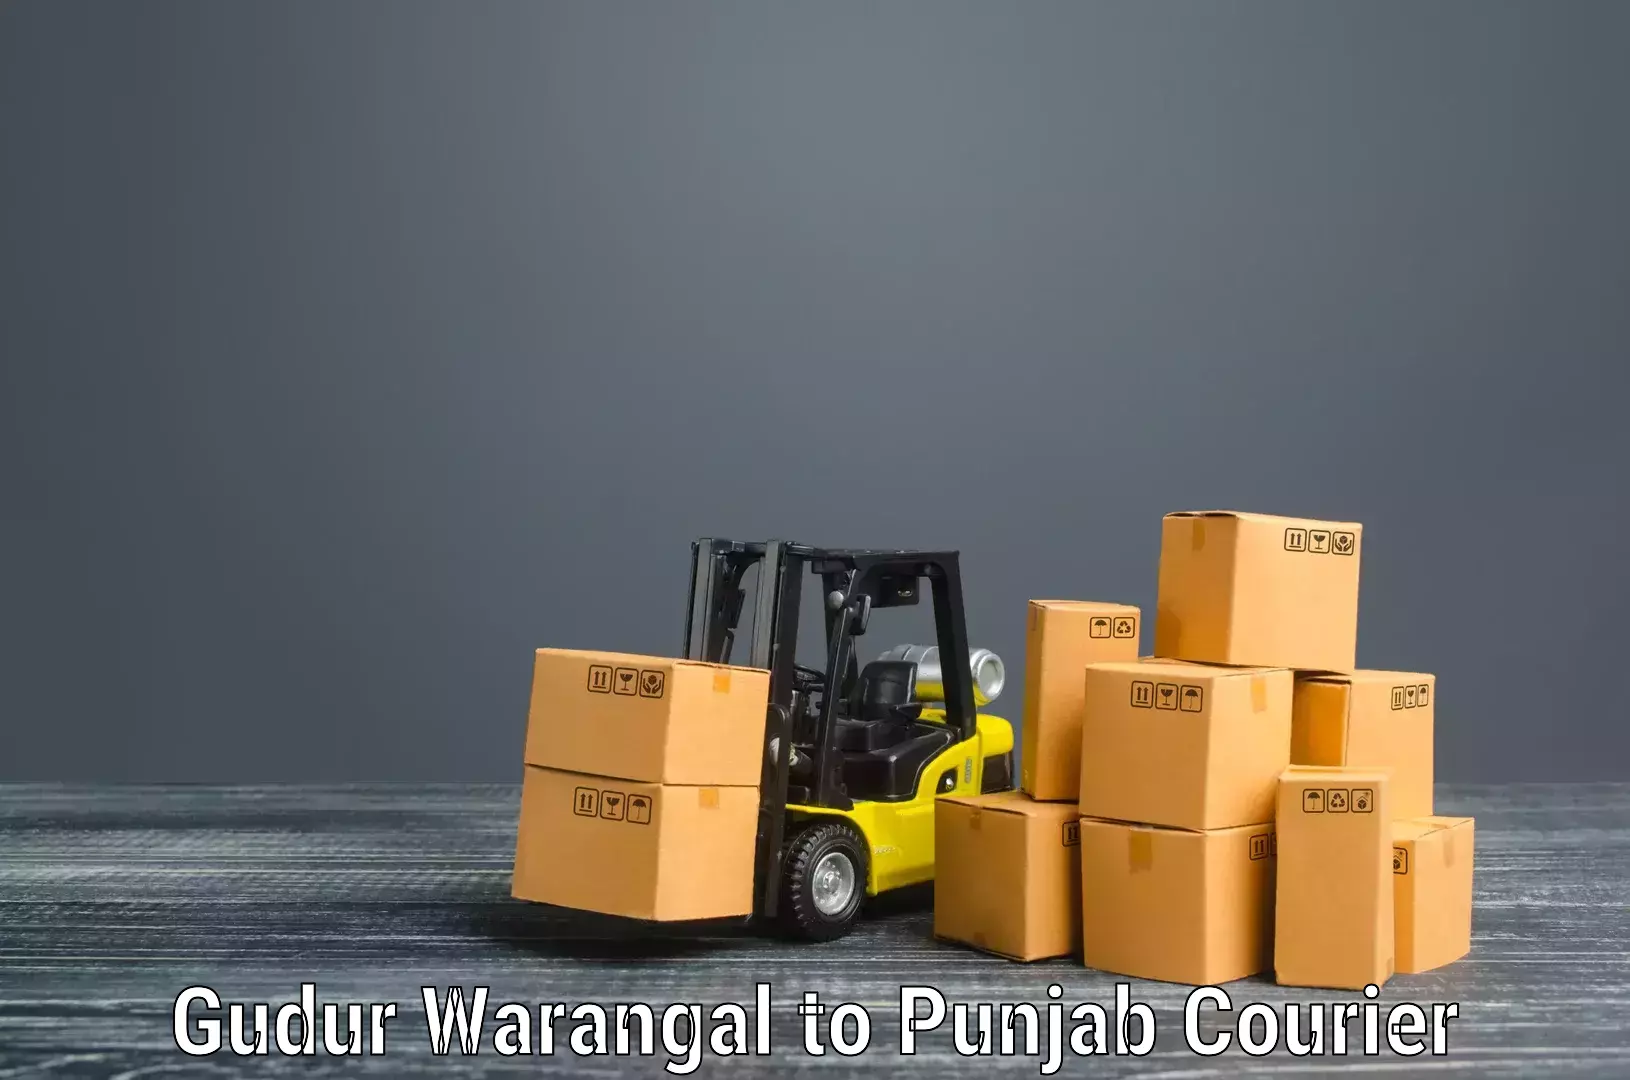 Specialized moving company Gudur Warangal to Punjab